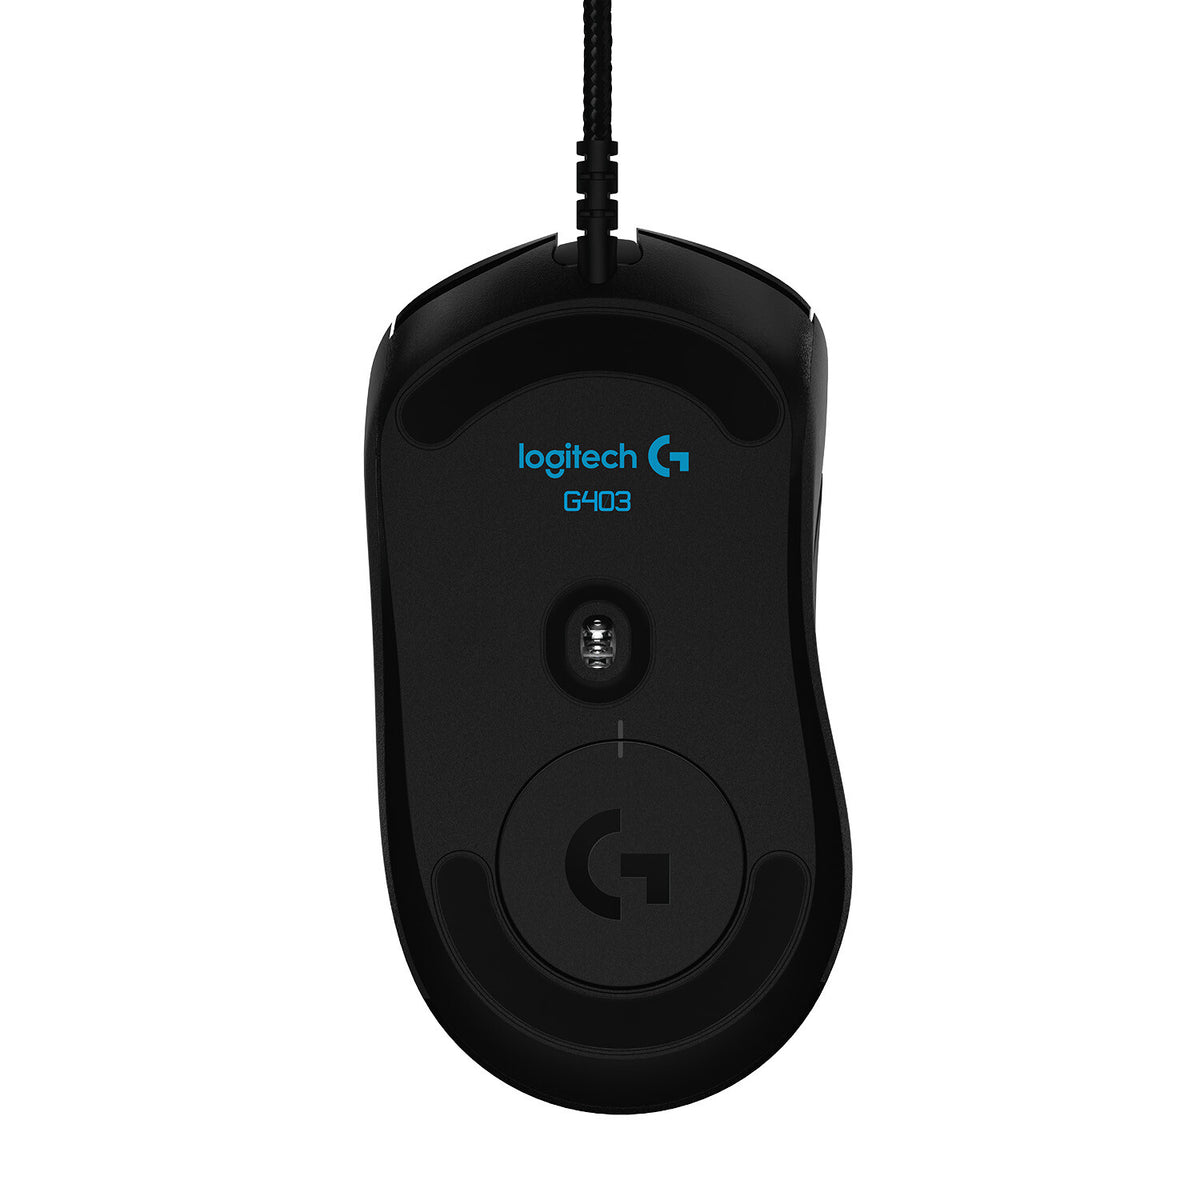 Logitech G - G403 HERO USB Type-A Optical Gaming Mouse - 25,600 DPI